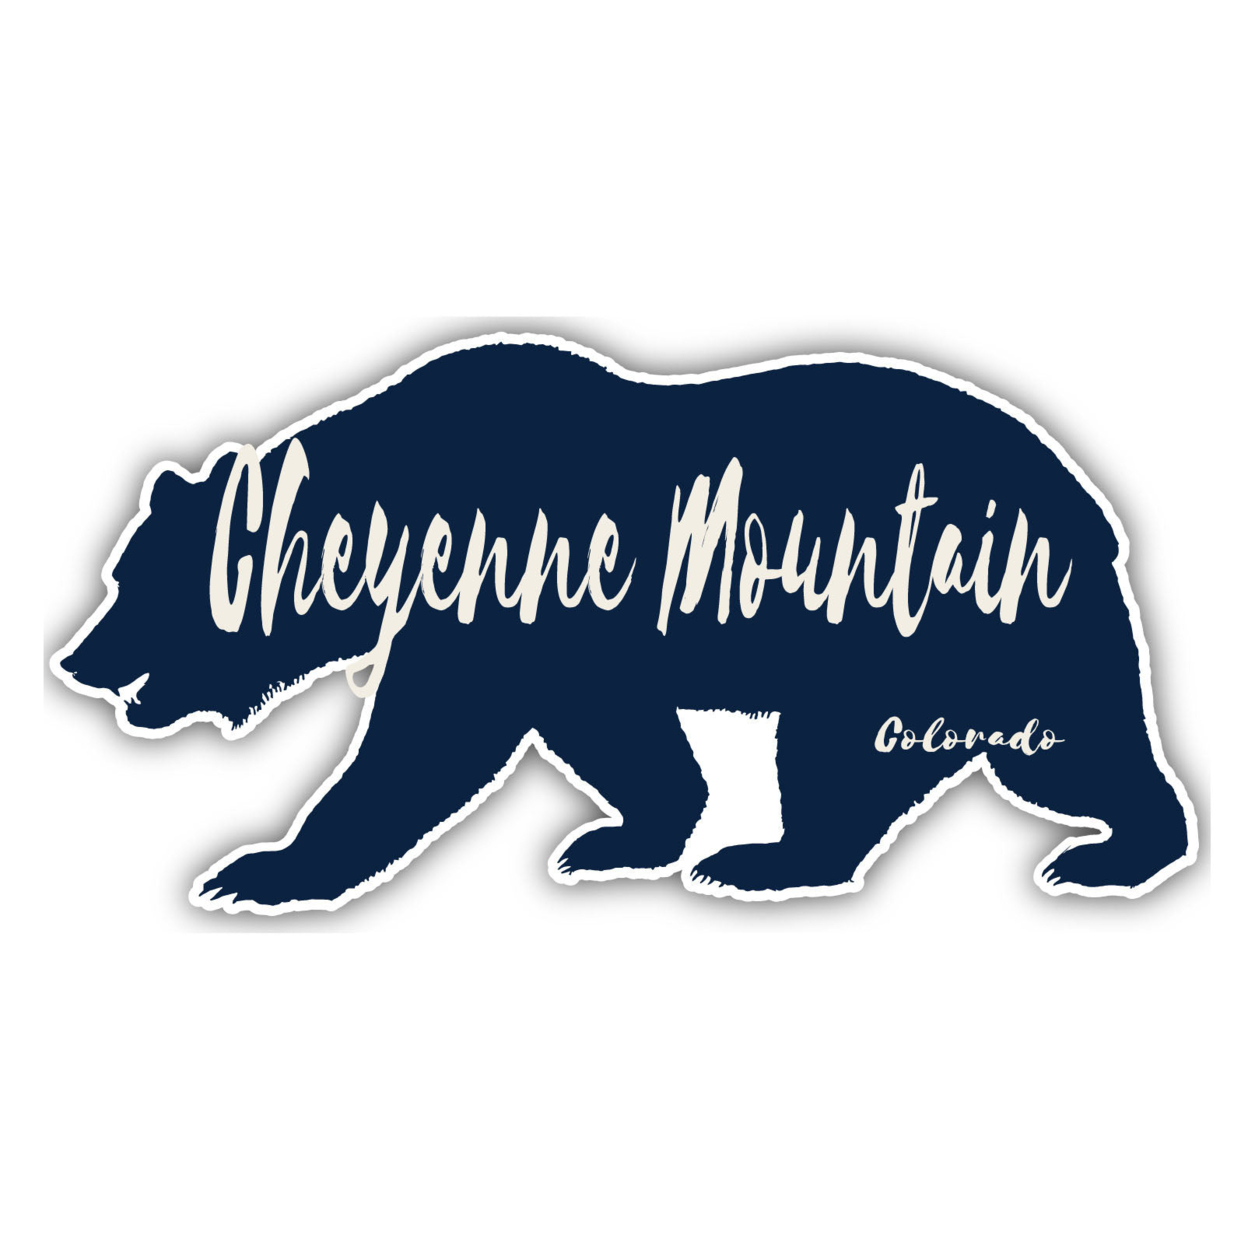 Cheyenne Mountain Colorado Souvenir Decorative Stickers (Choose Theme And Size) - 4-Pack, 6-Inch, Bear